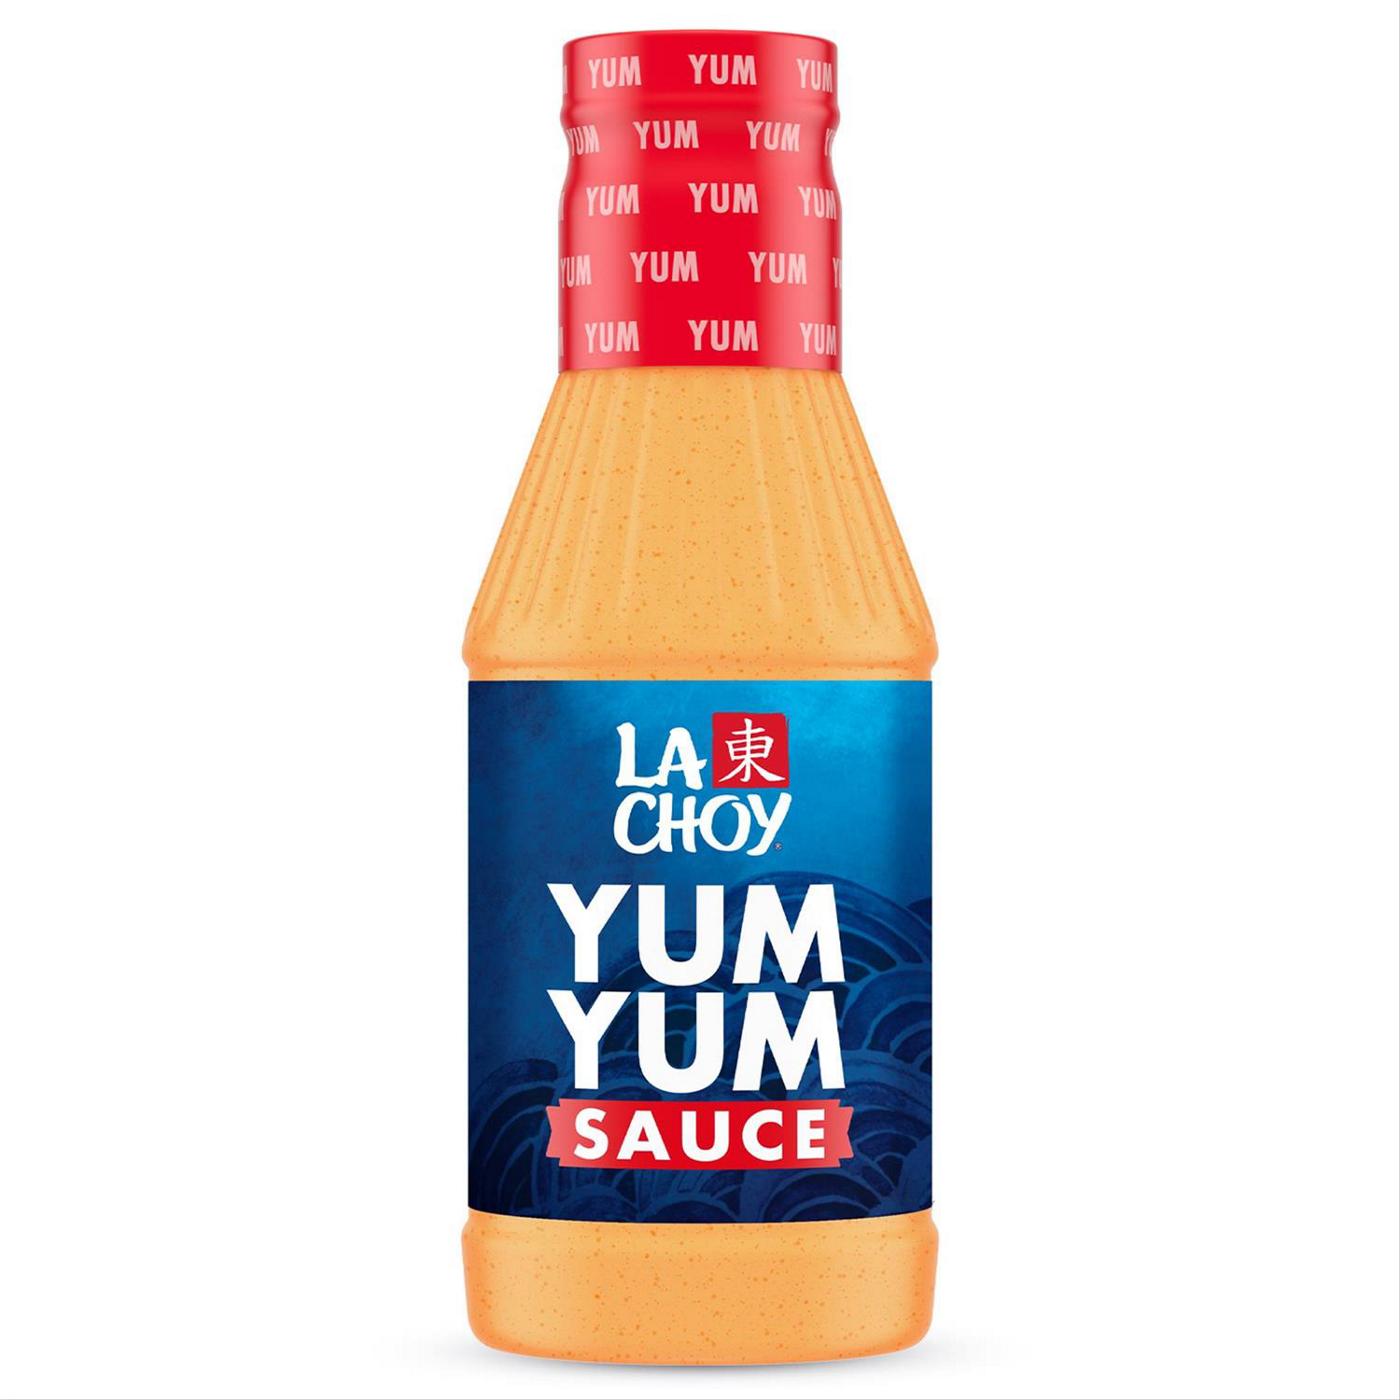 La Choy Yum Yum Sauce; image 1 of 4